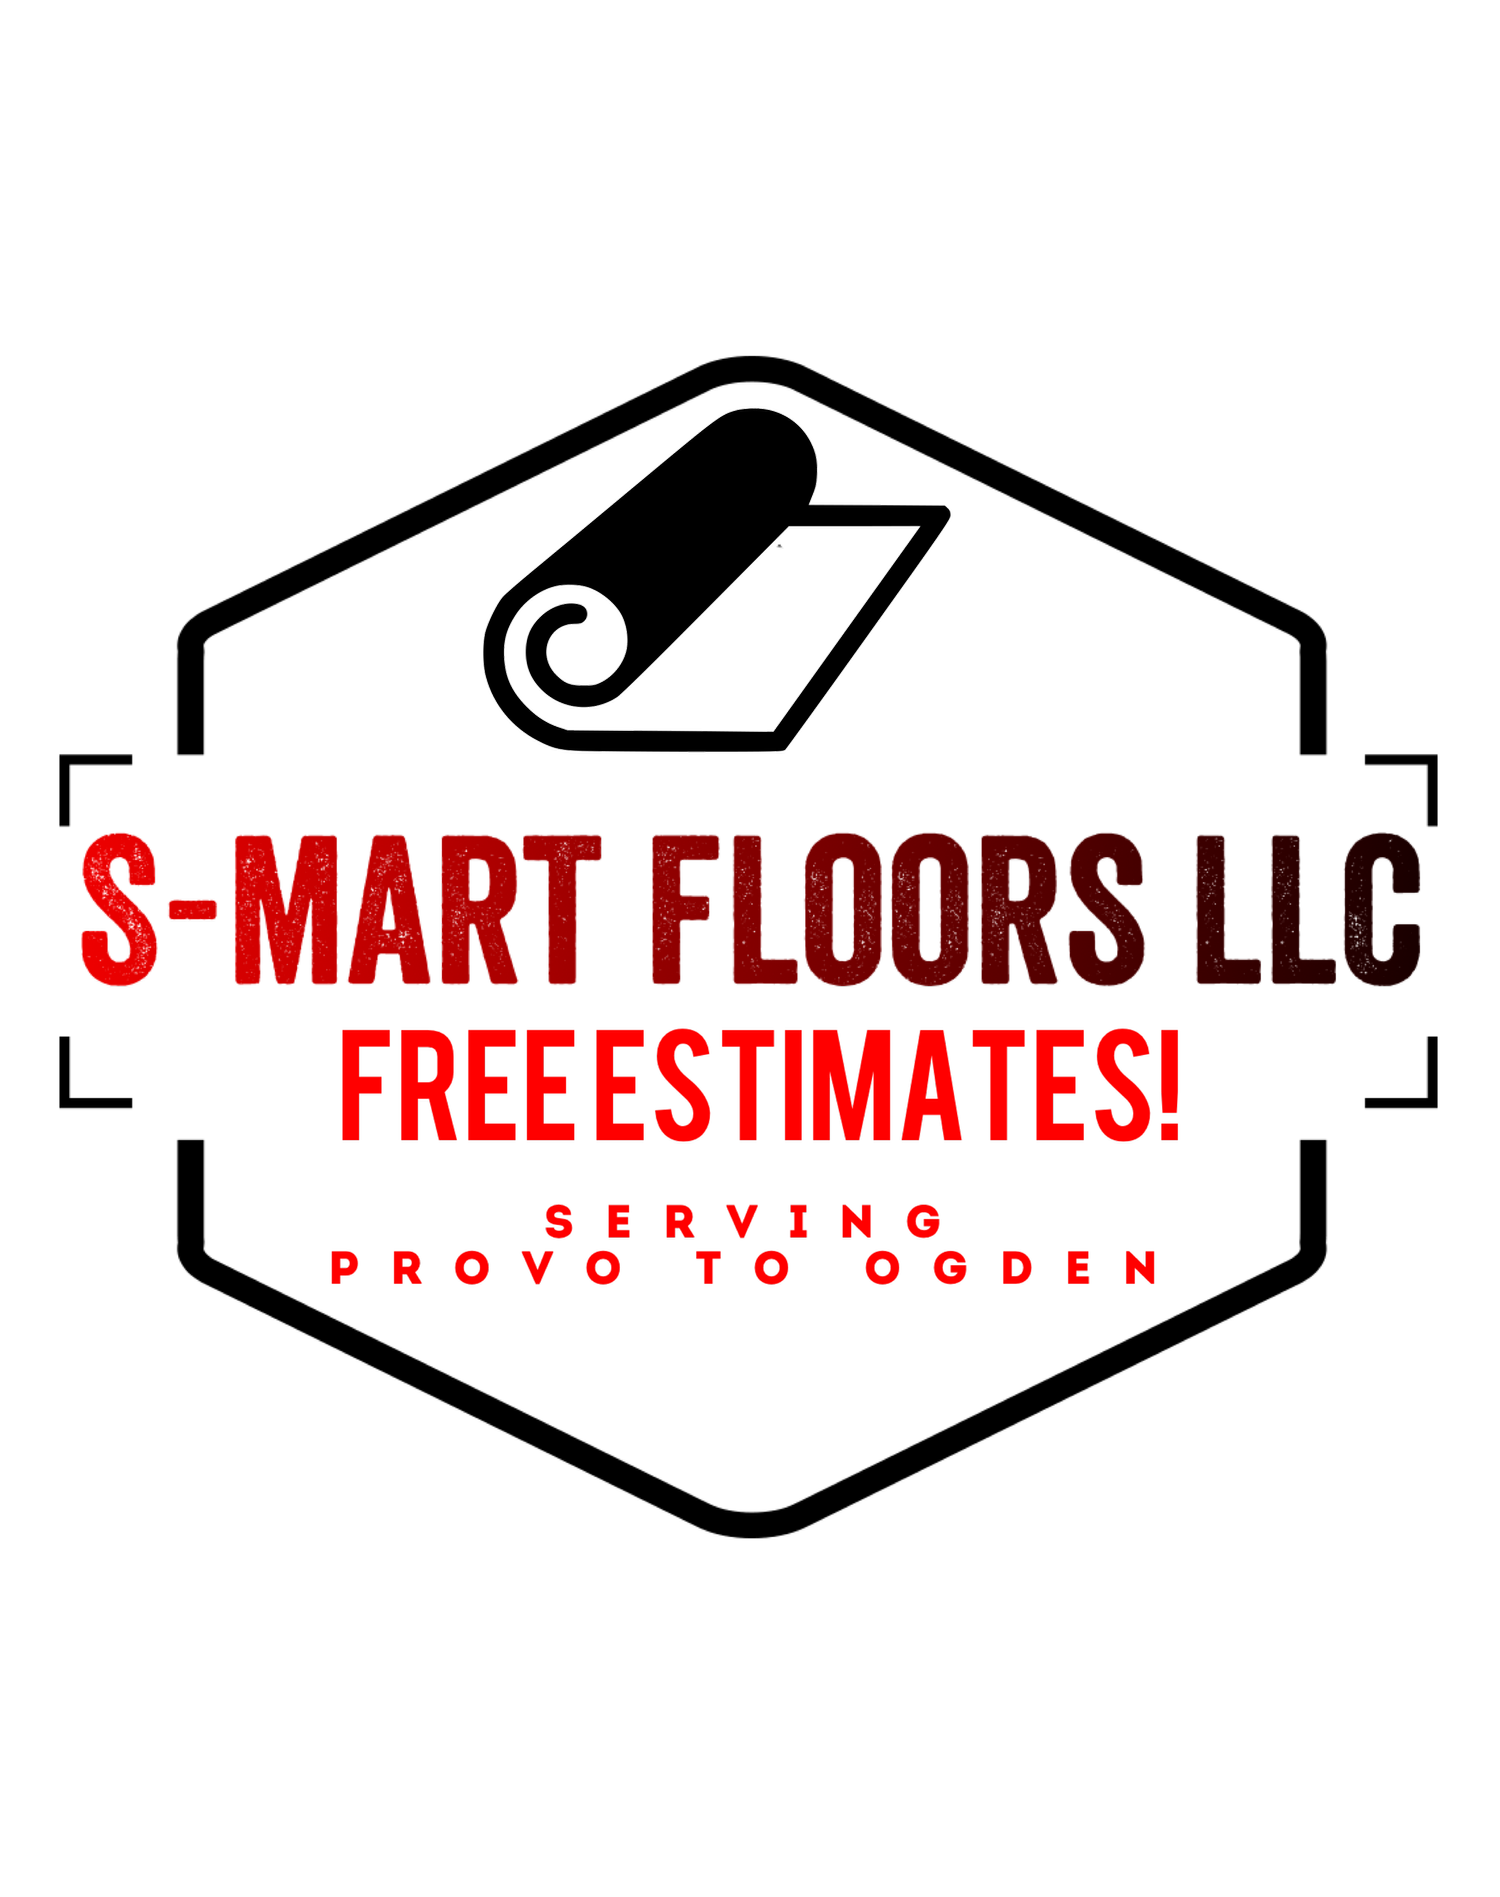 S-mart floors llc 